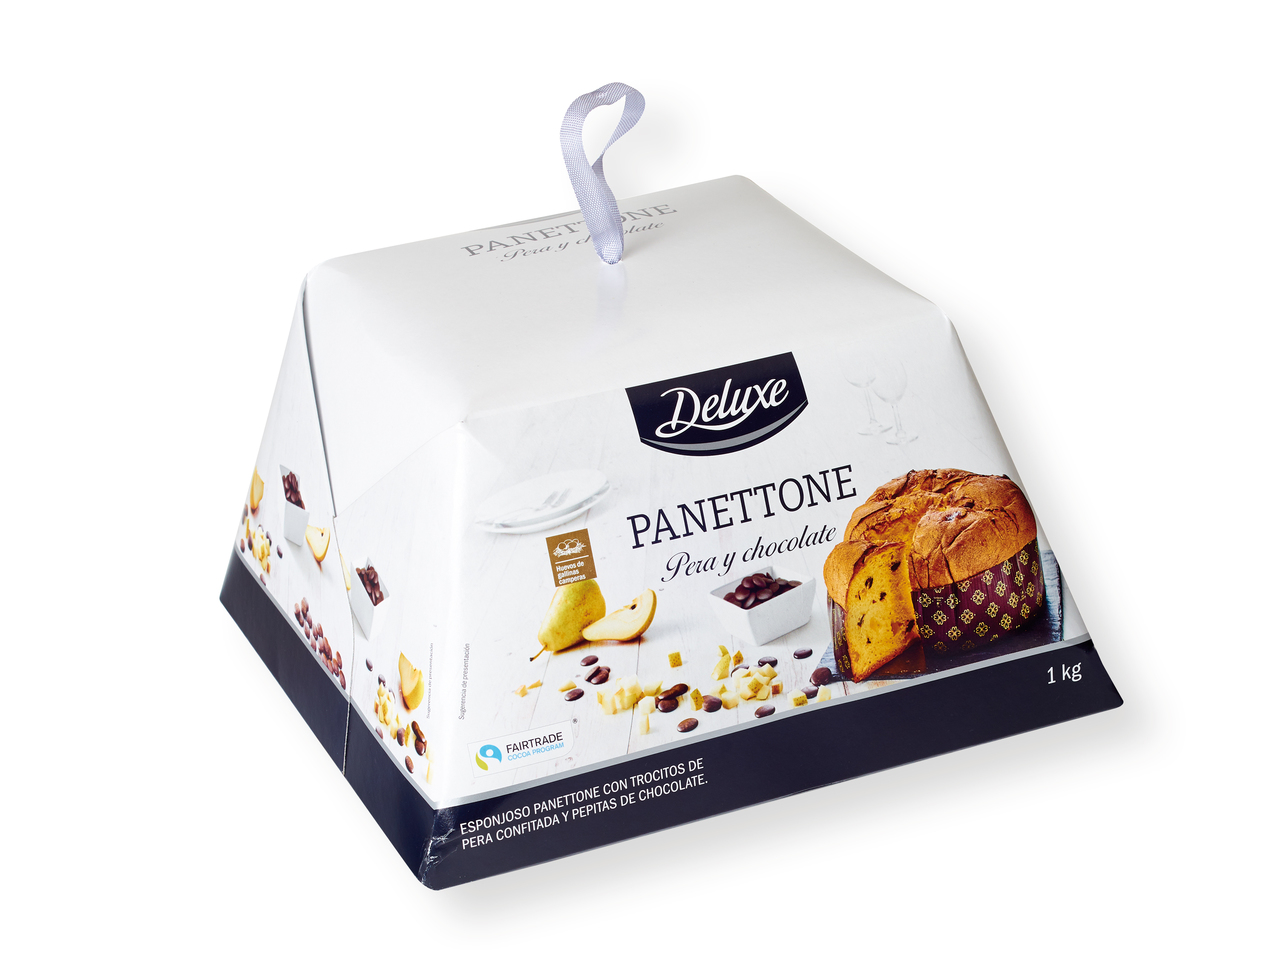 "Deluxe" Panettone con pera y chocolate